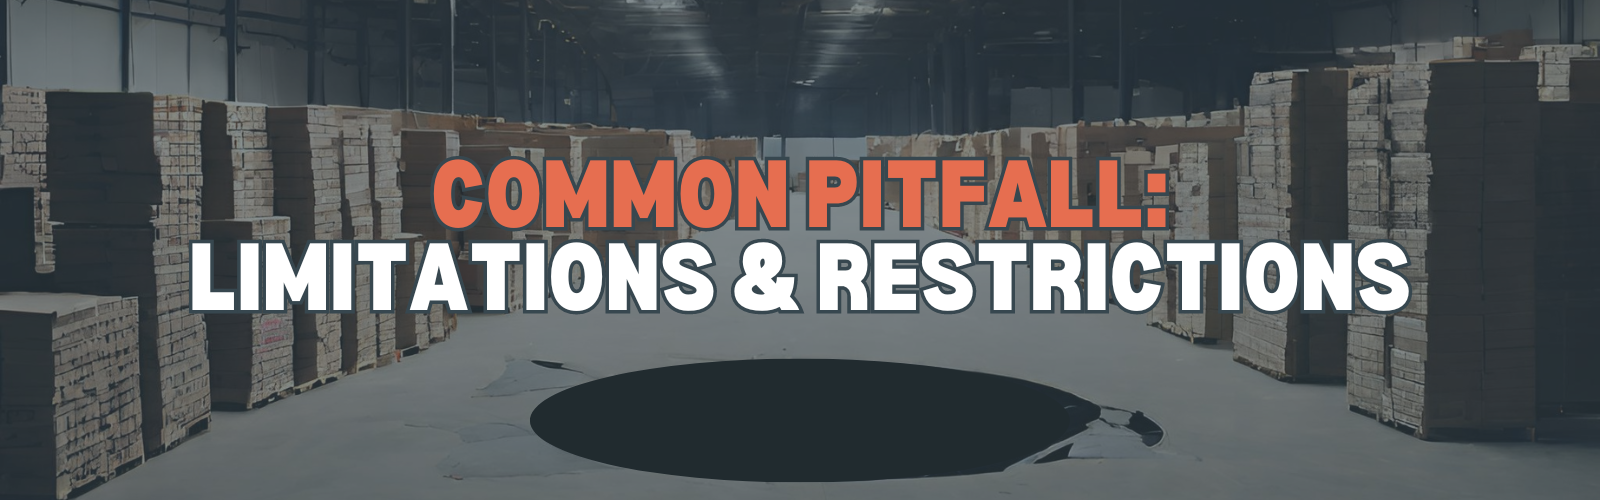 Amazon FBA - Common Pitfall - Amazons FBA Limitations and Restrictions